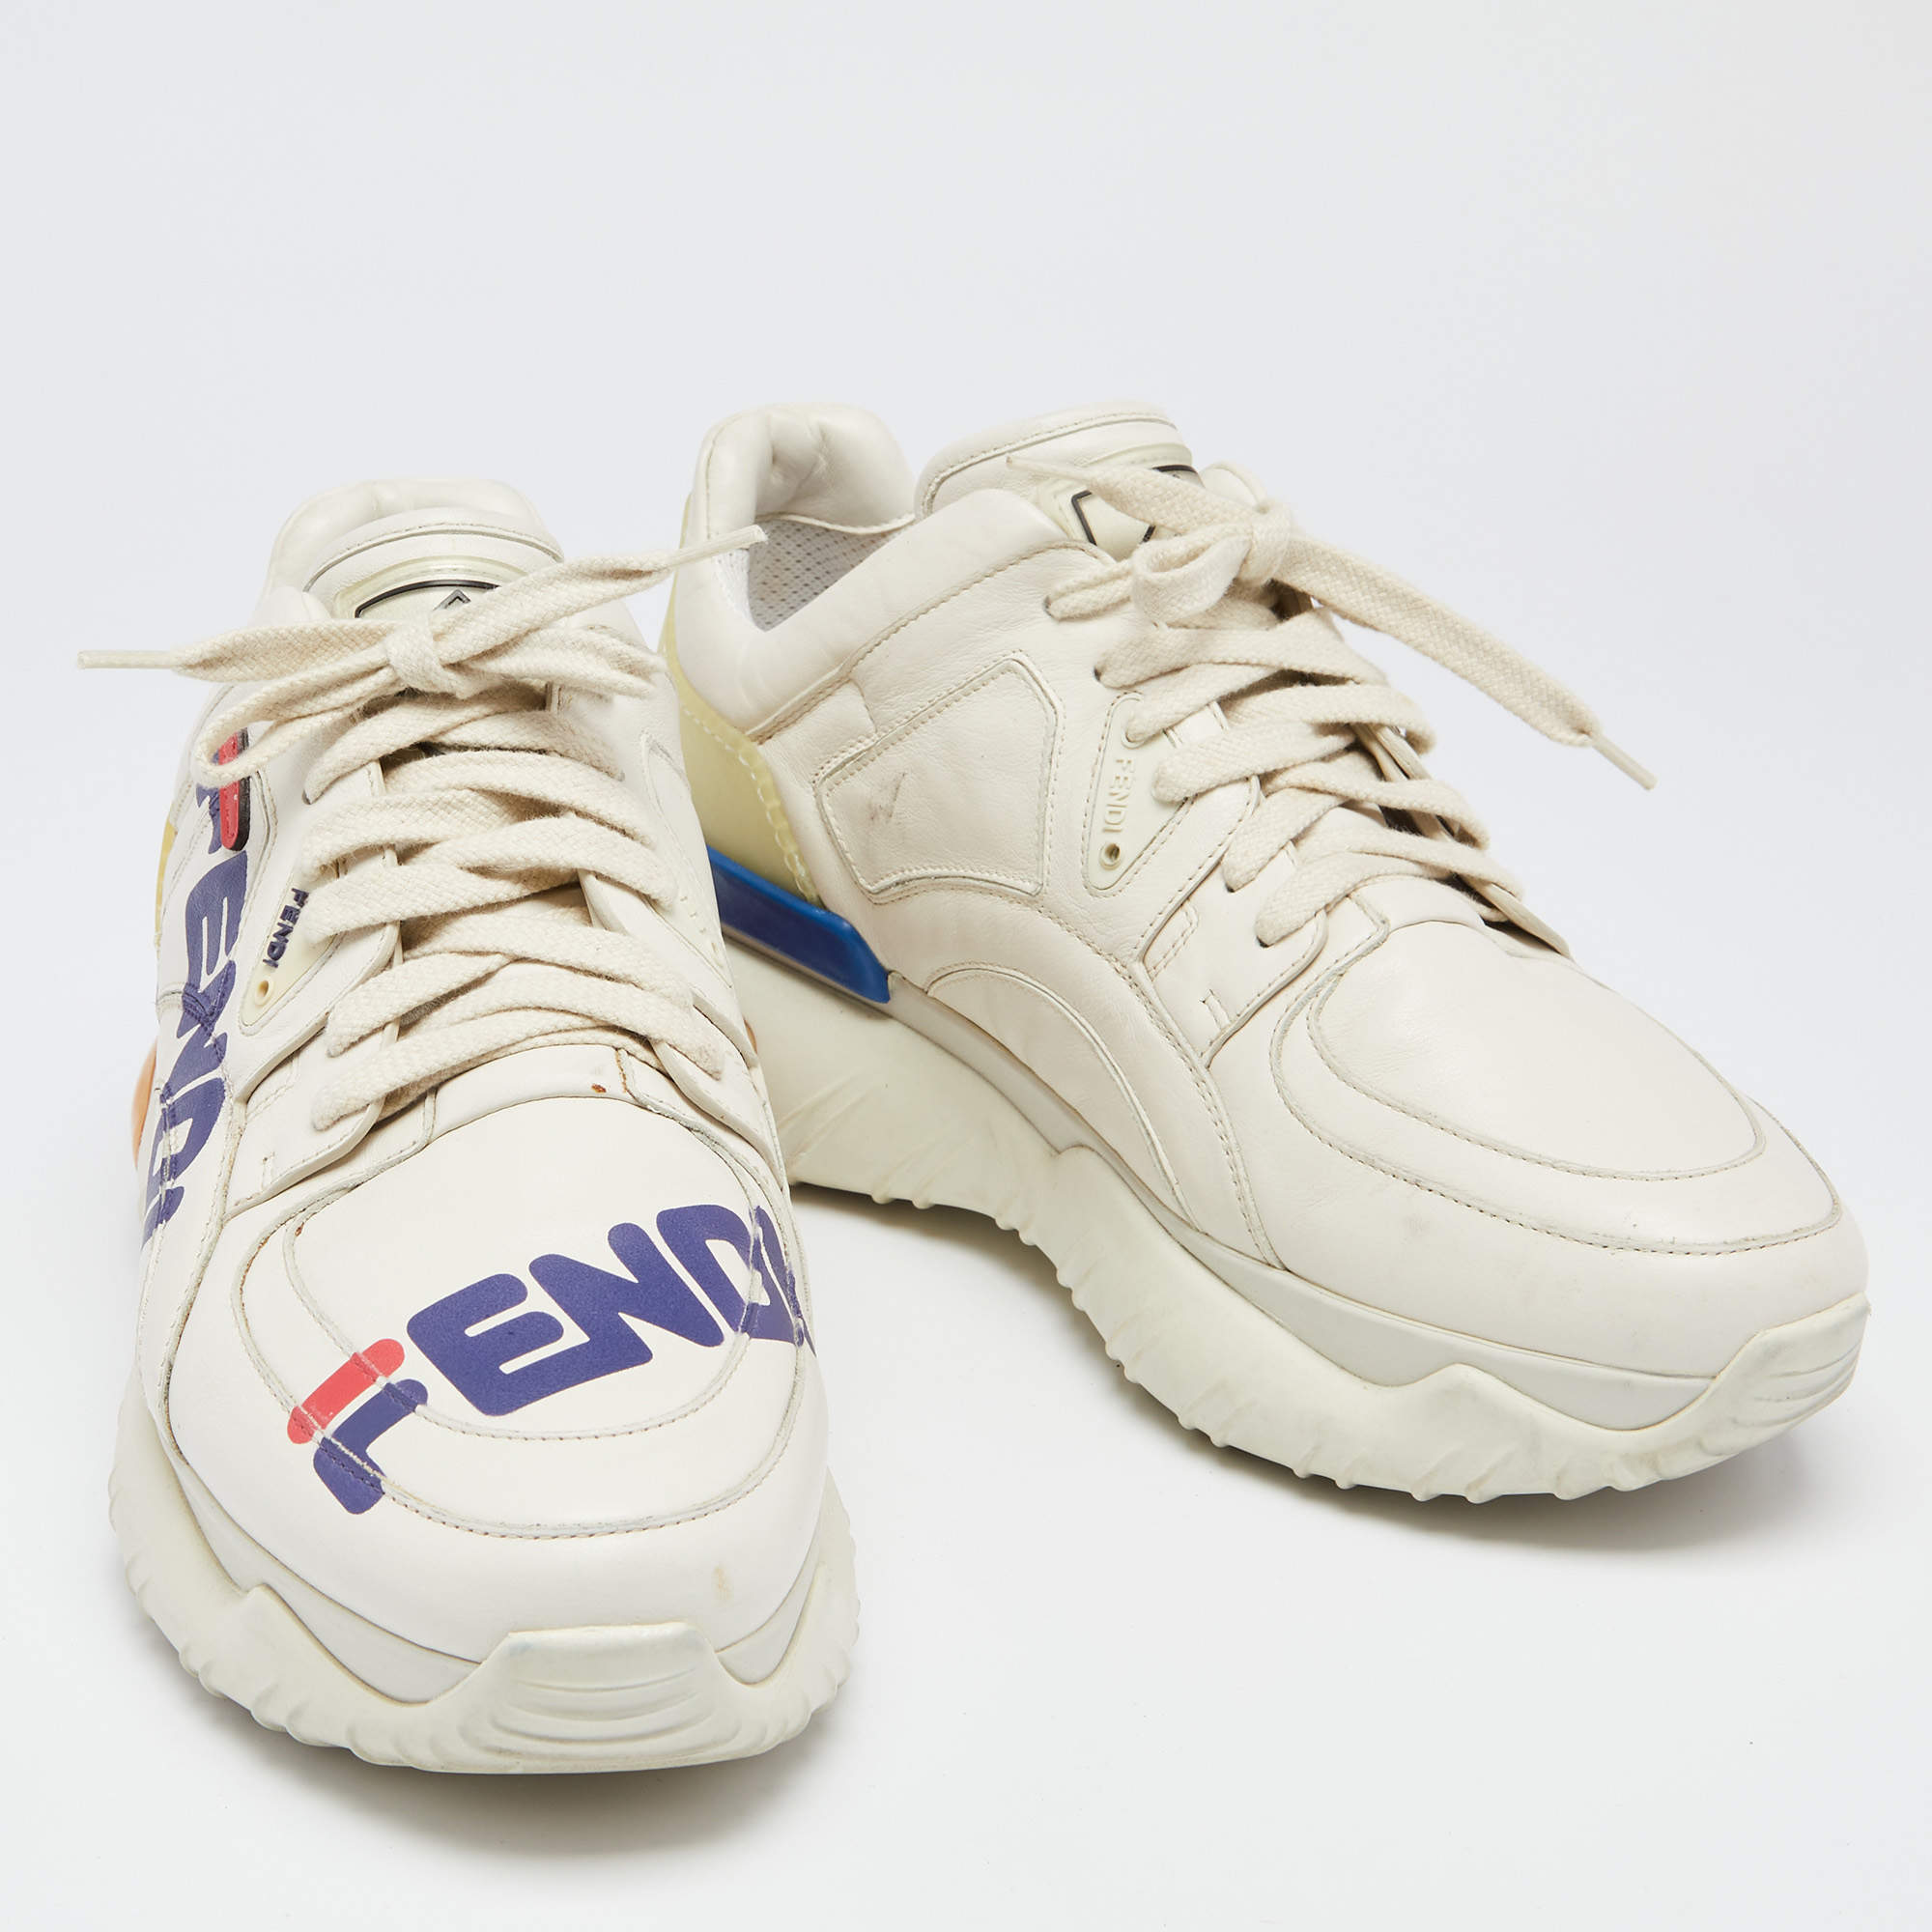 Fendi Men's Fendi Mania Reloaded FF Sock Sneakers | Neiman Marcus